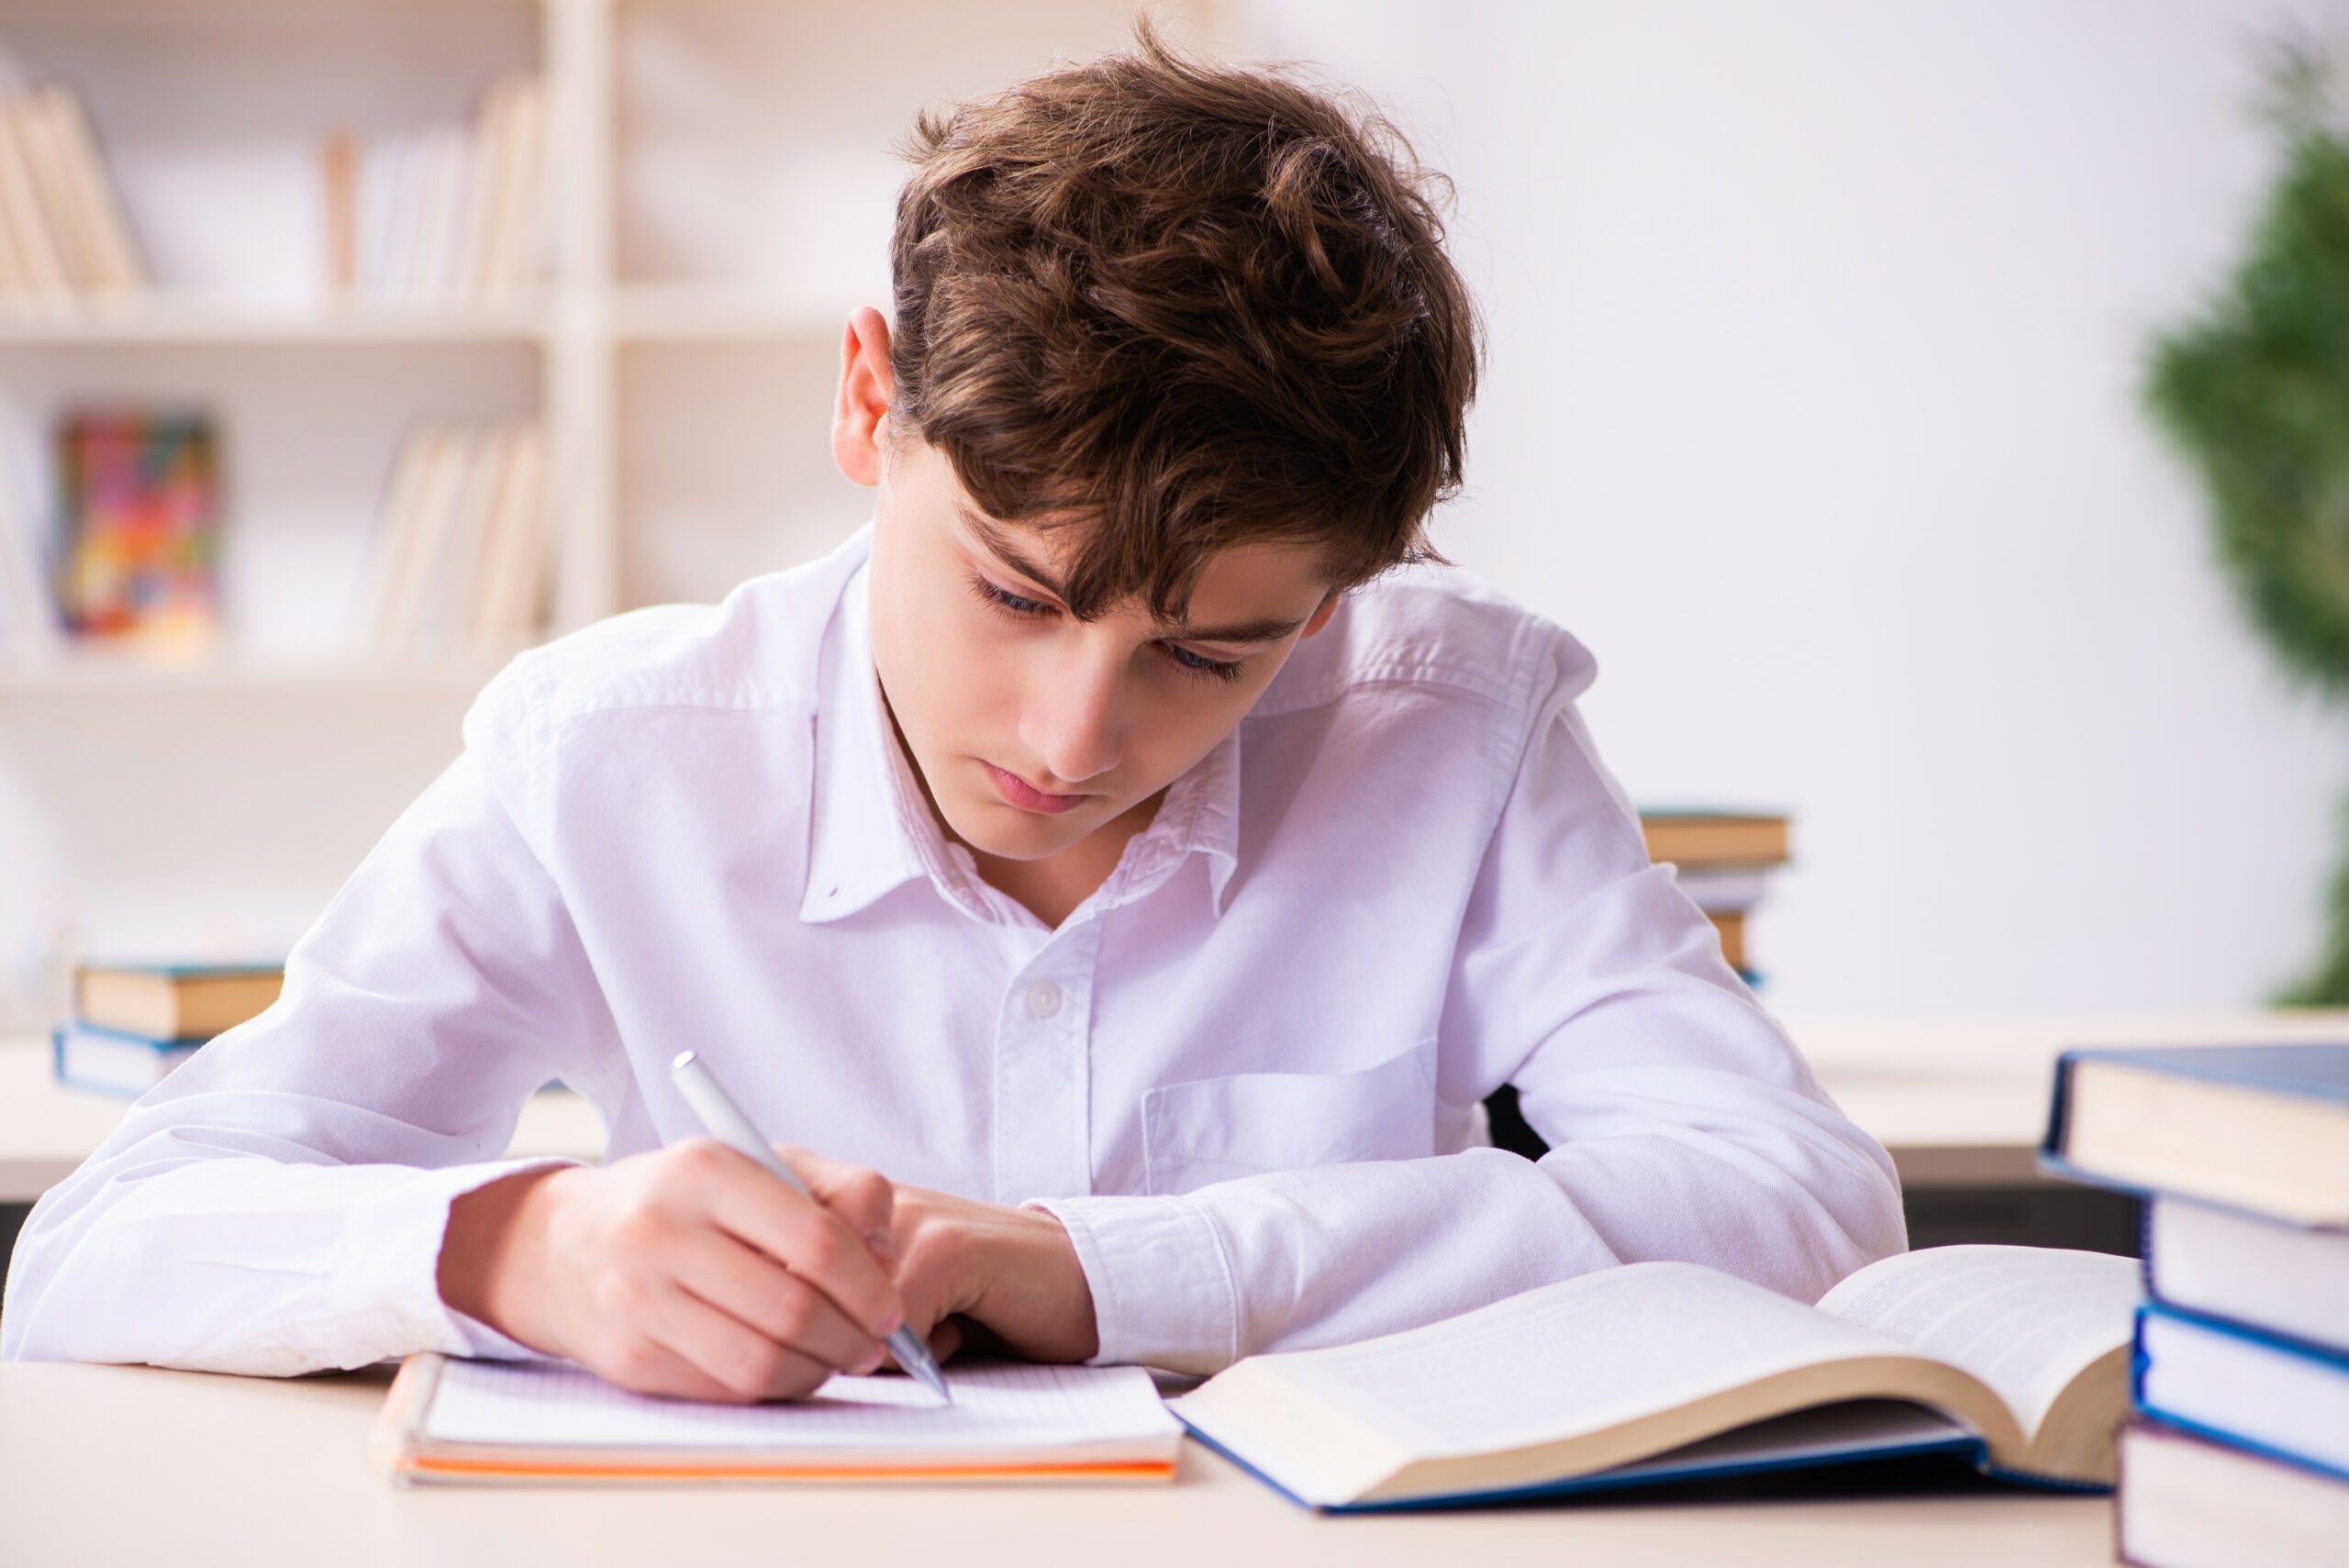 schoolboy image for handwriting practice club